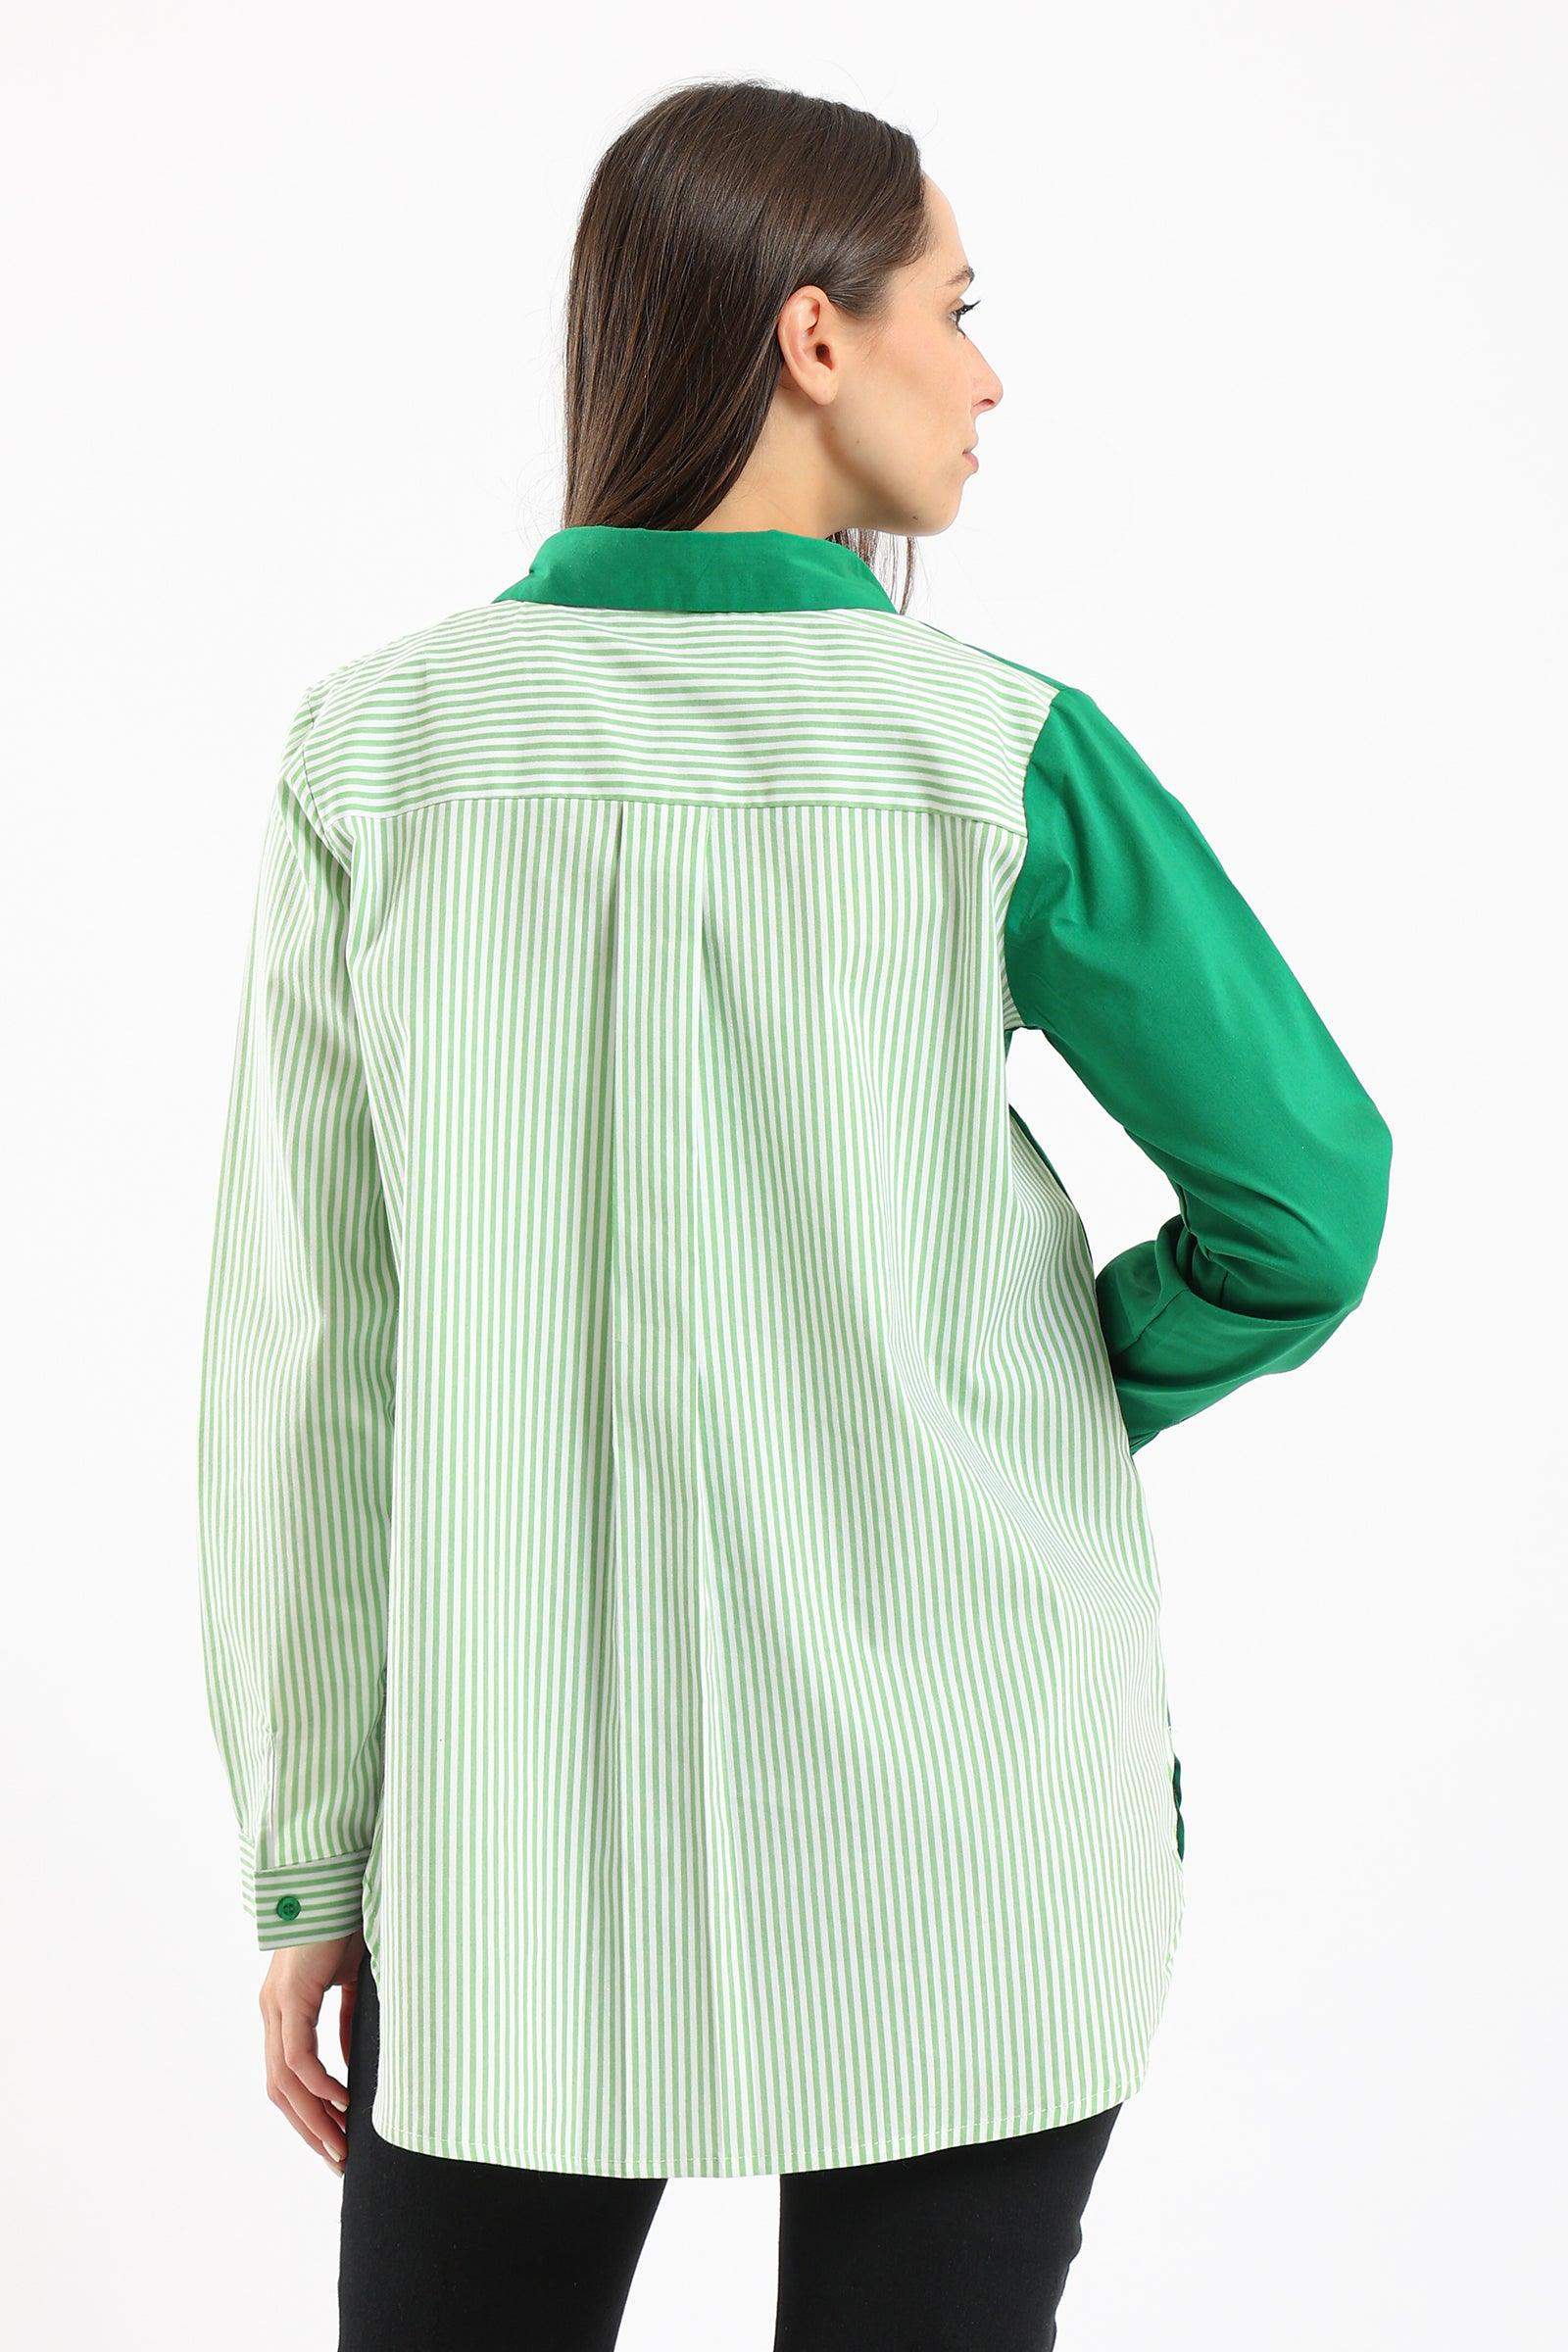 Green Two-Tone Button Up Shirt - Carina - كارينا